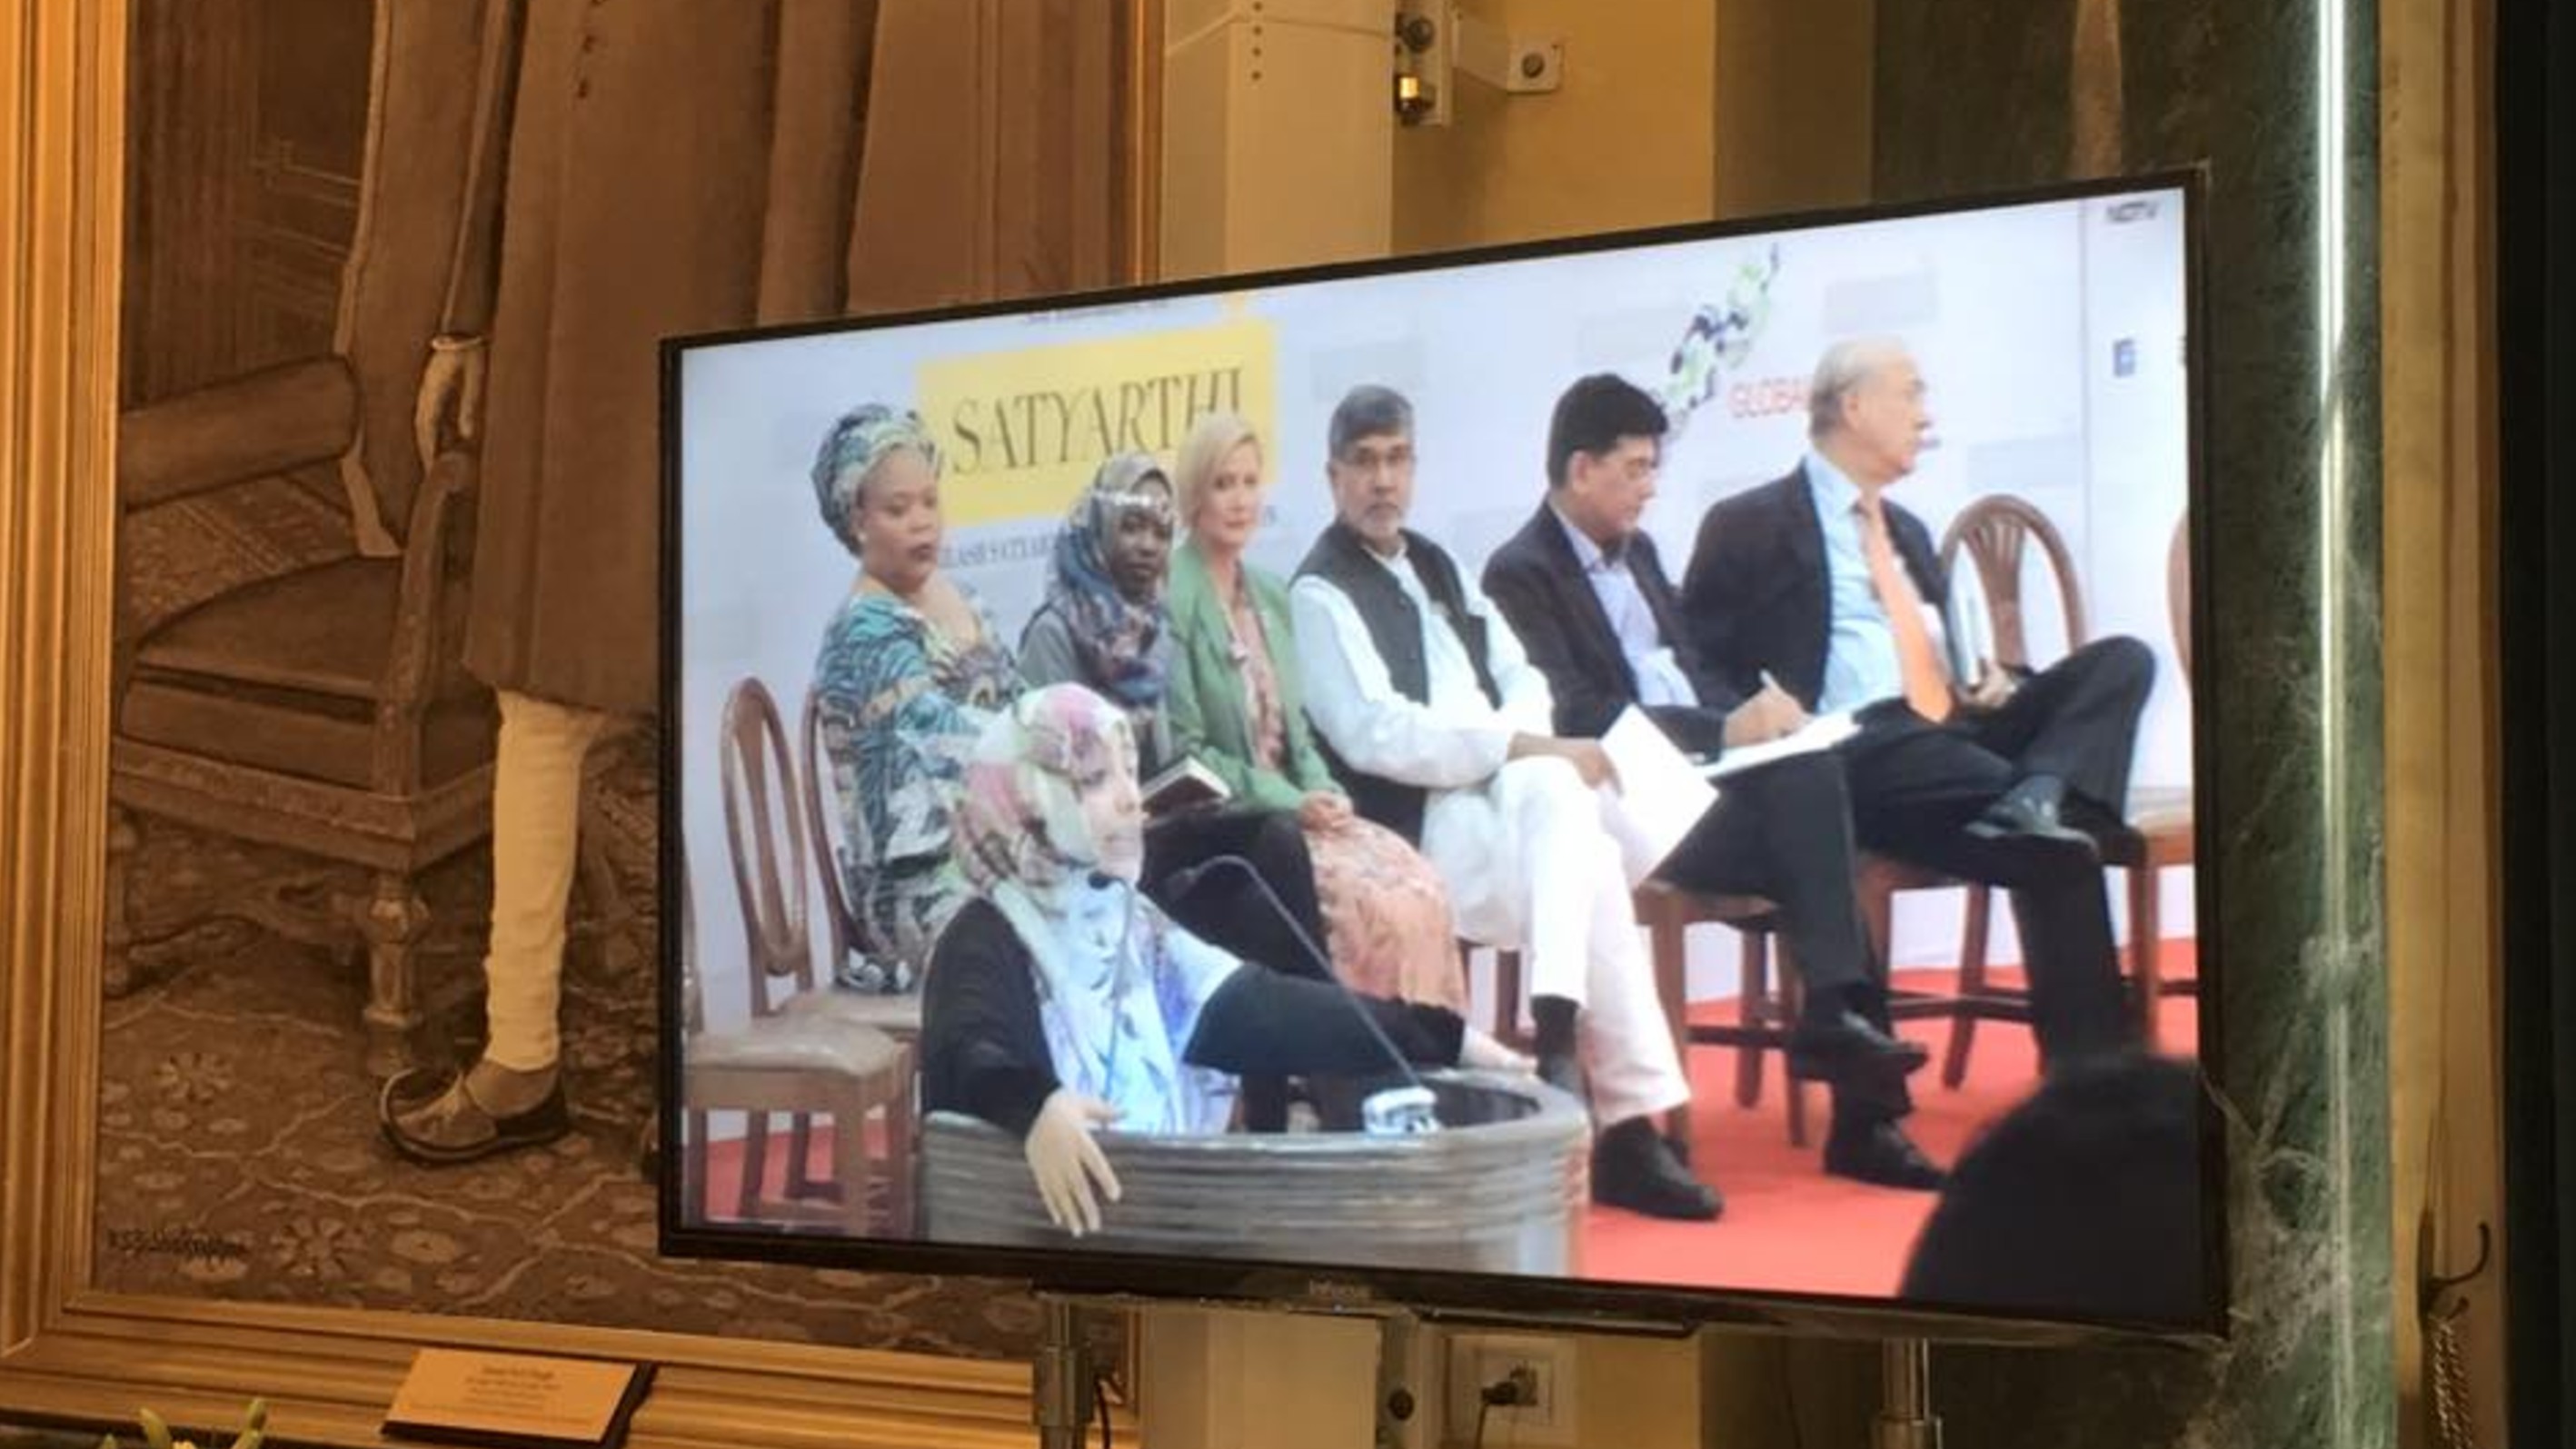 Mrs. Tawakkol Karman’s speech at Children Summit of Nobel Laureates and Global Leaders held - New Delhi